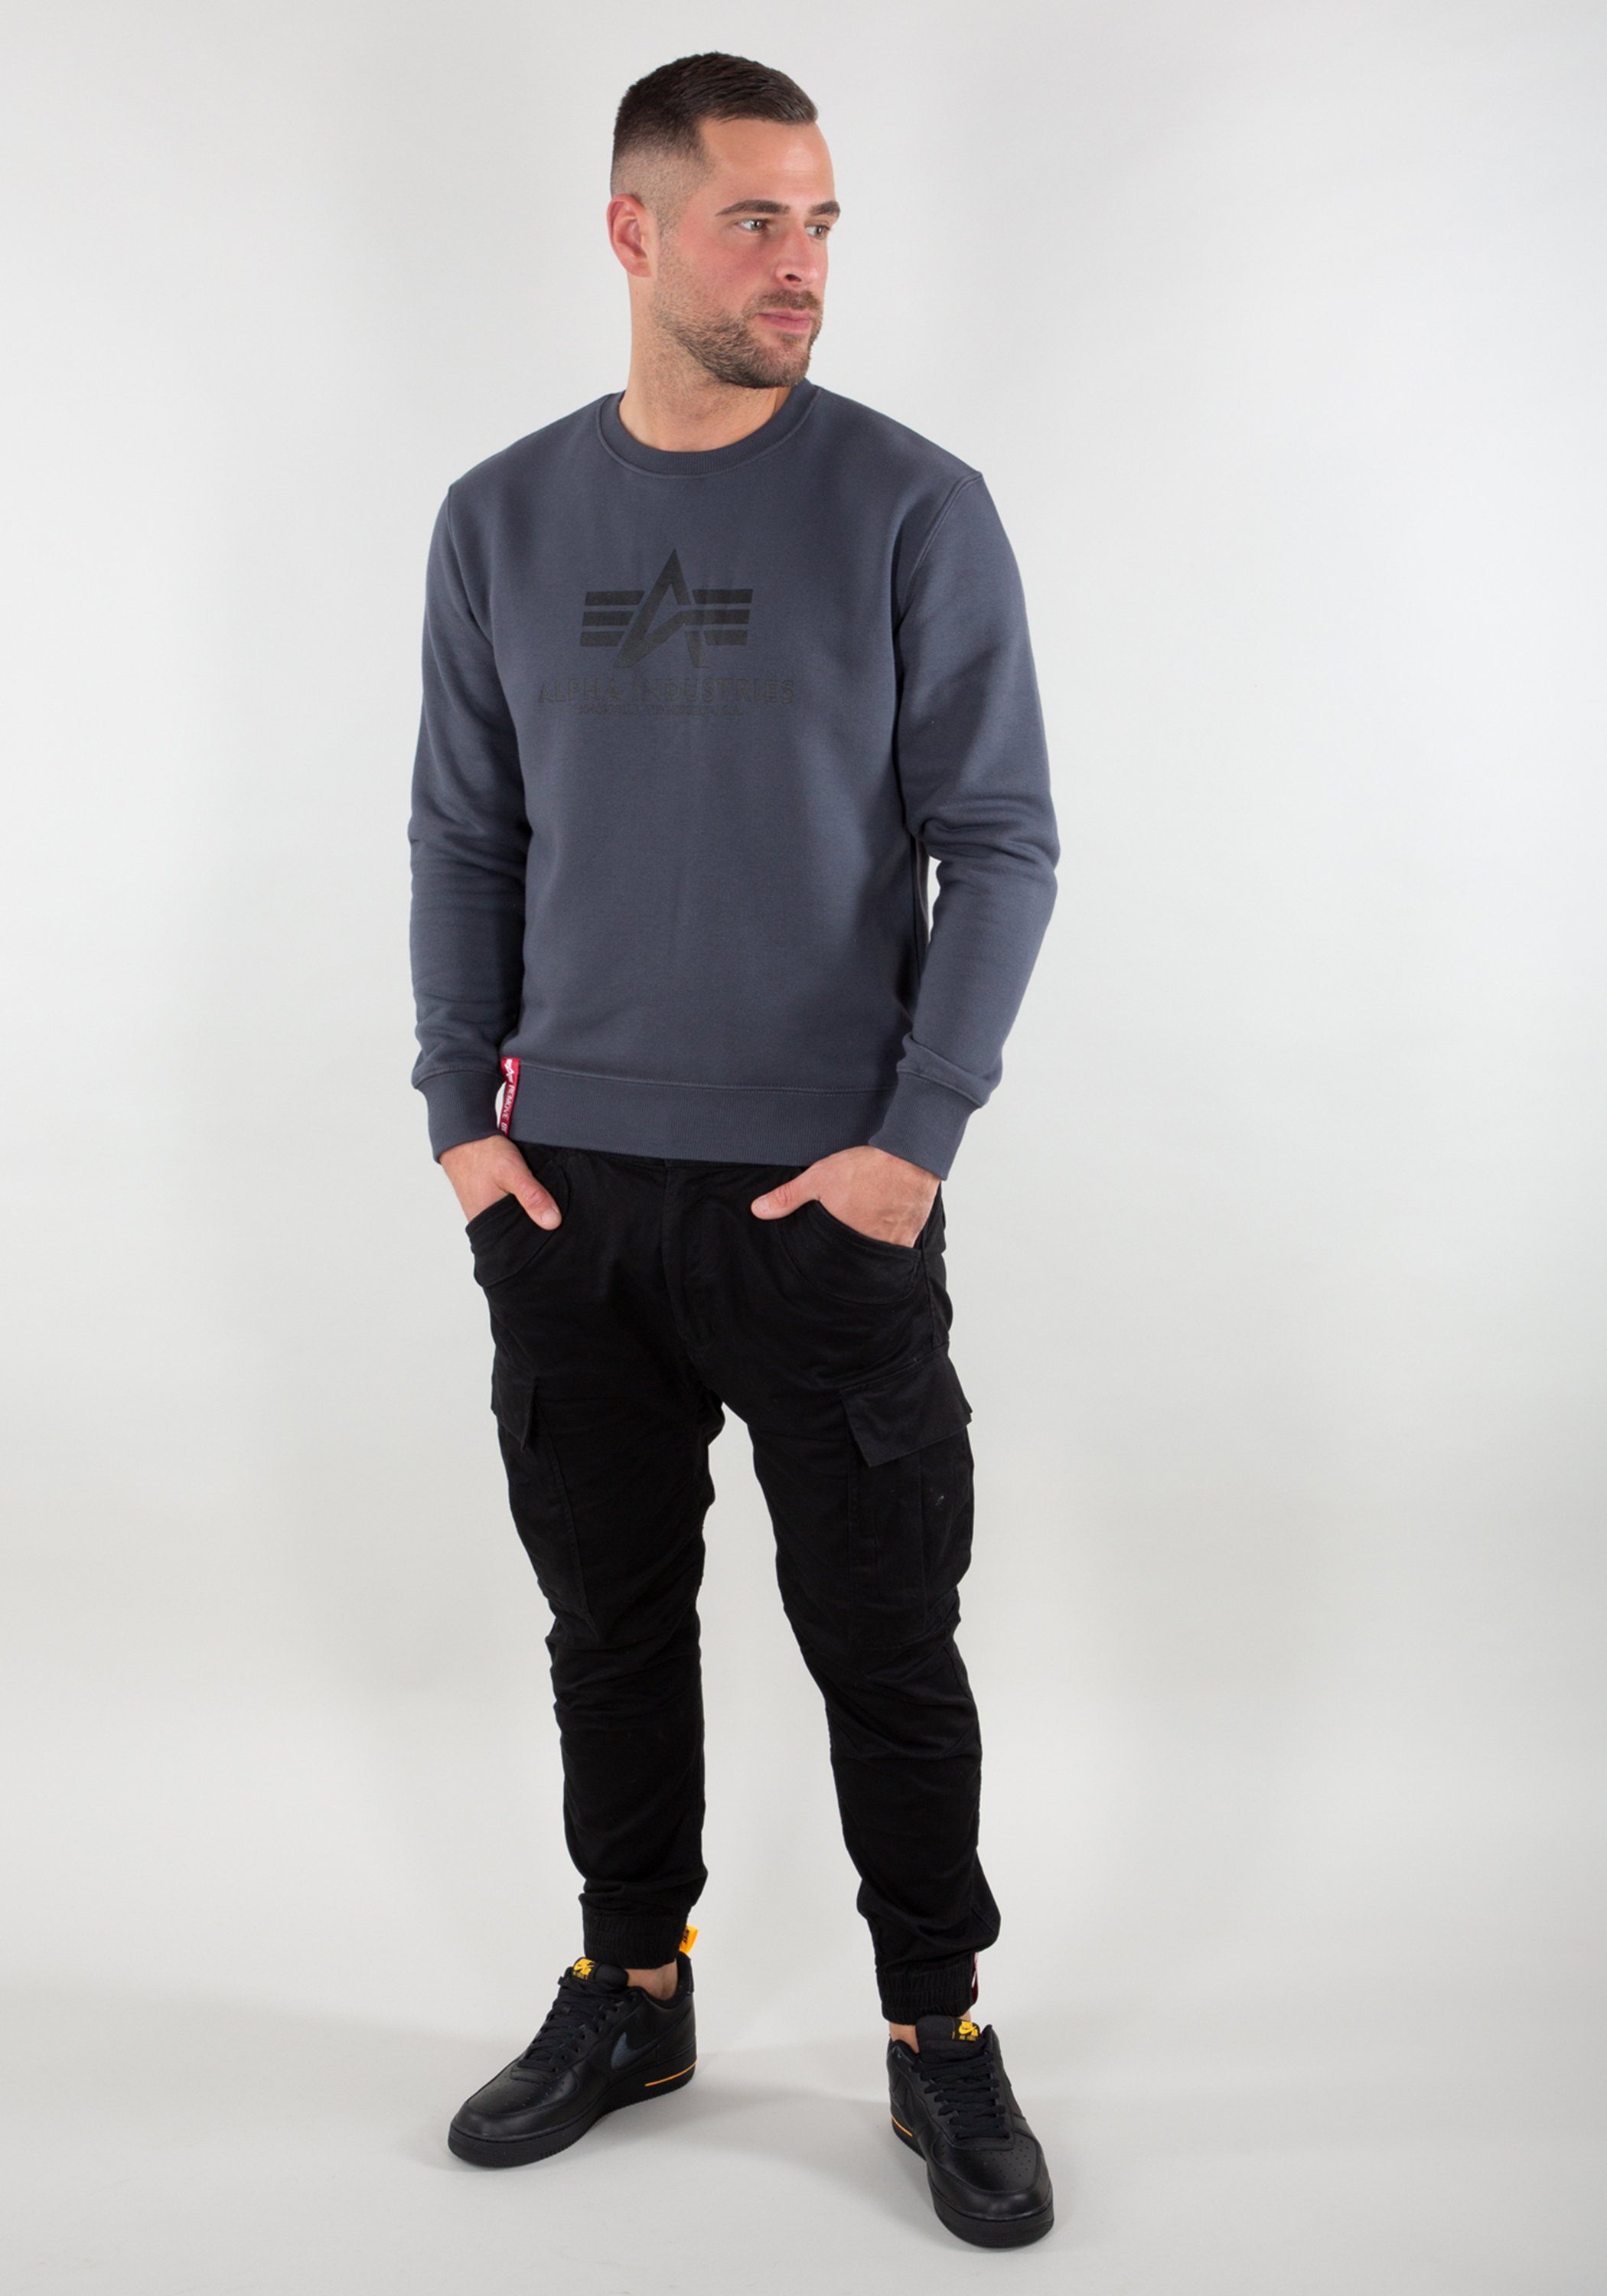 Alpha Alpha Men greyblack/black Sweater Sweatshirts - Industries Sweater Basic Industries